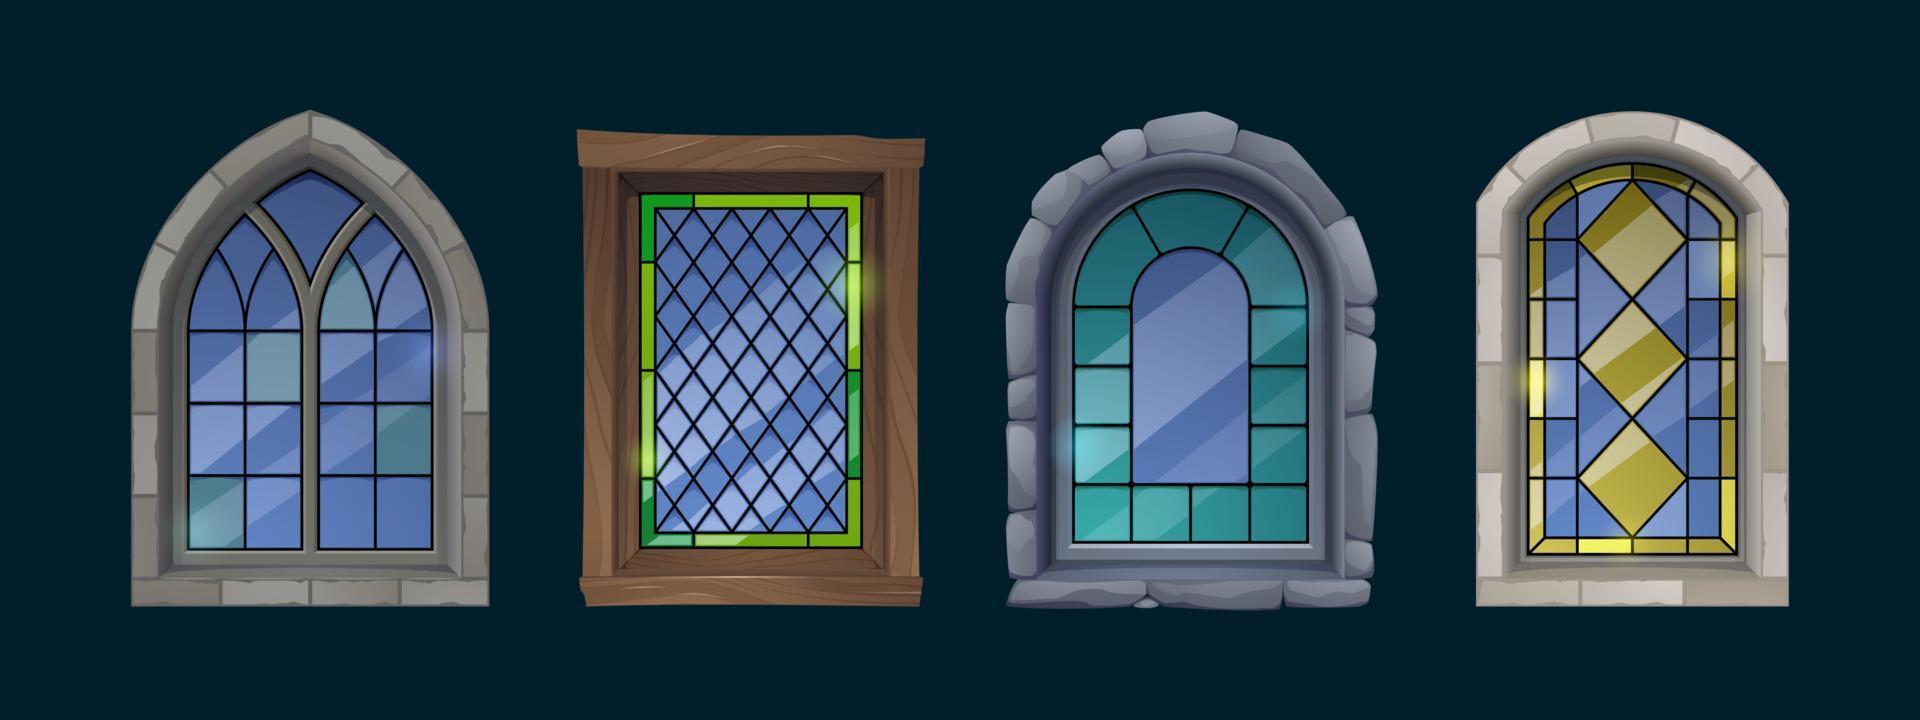 Cartoon-Buntglasfenster, katholische Kirche vektor